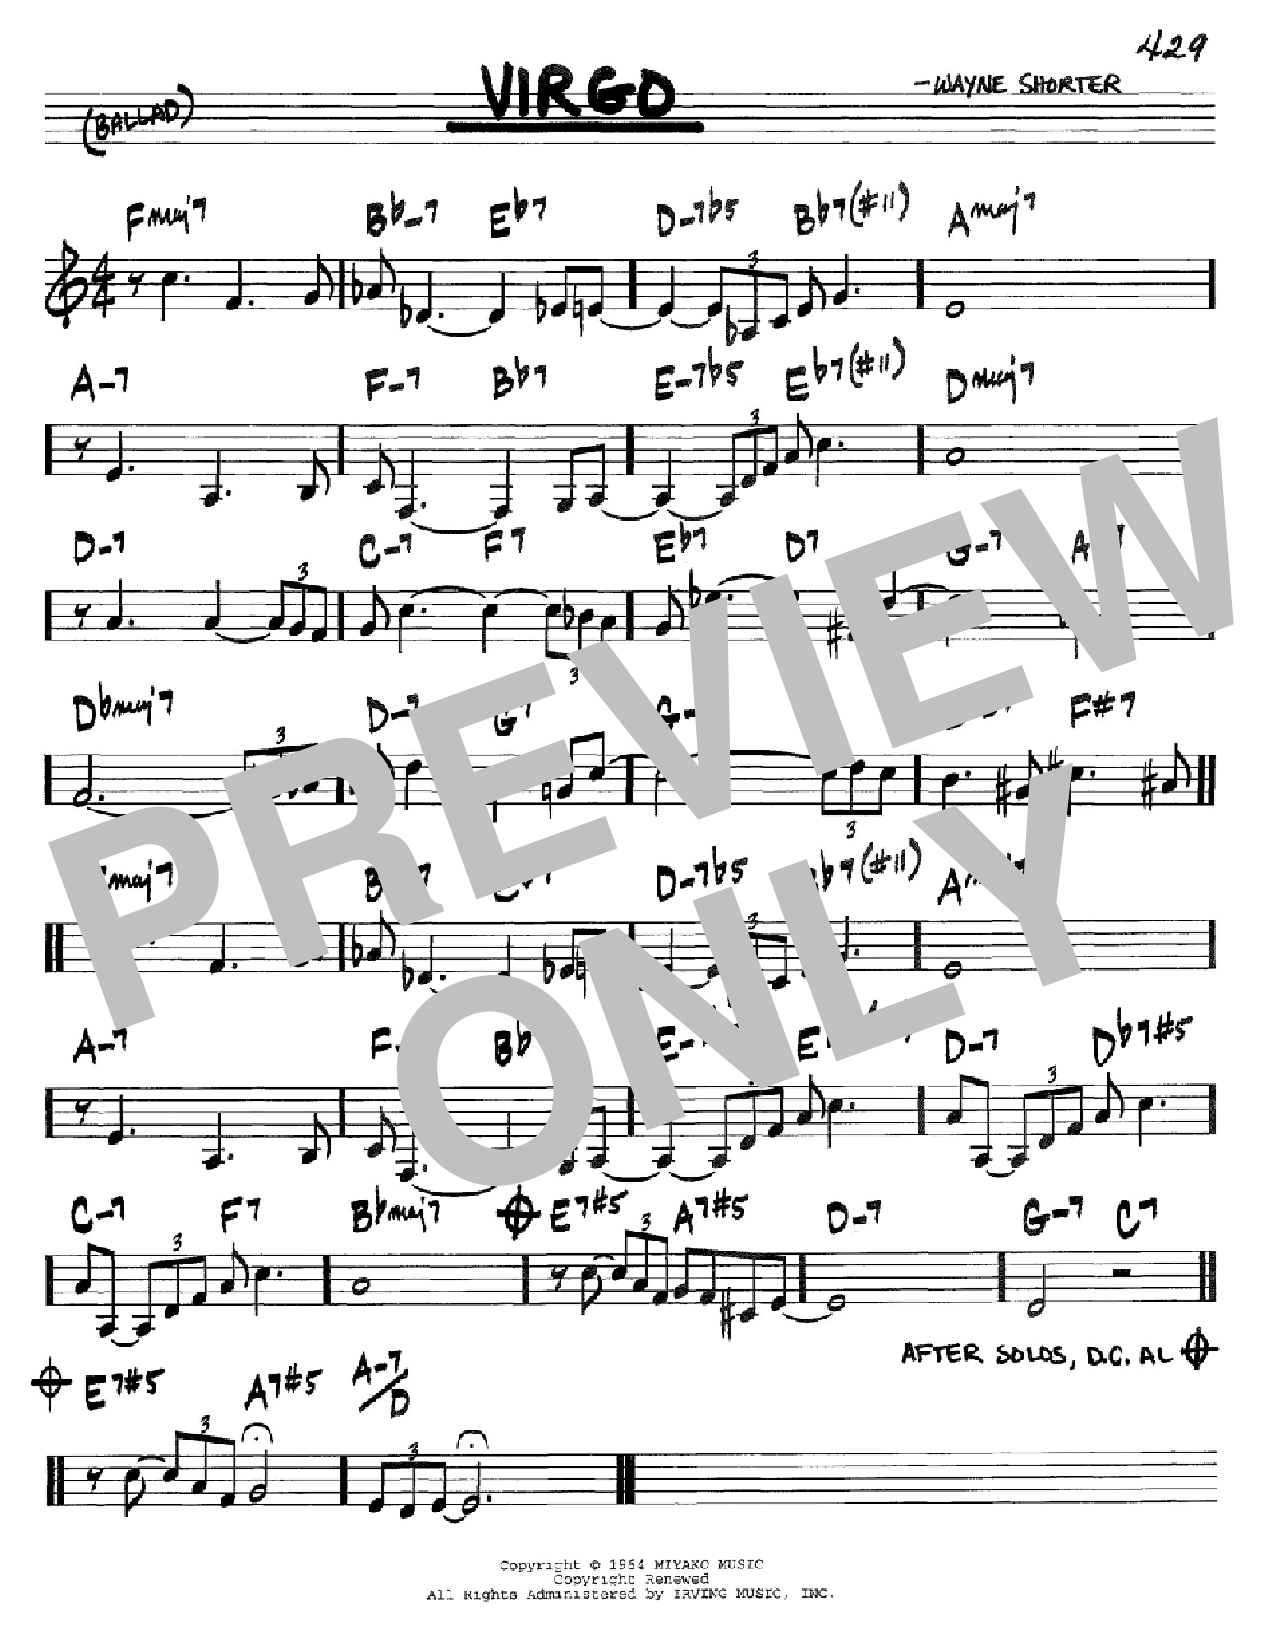 Wayne Shorter Virgo Sheet Music Notes & Chords for Real Book - Melody & Chords - Bb Instruments - Download or Print PDF